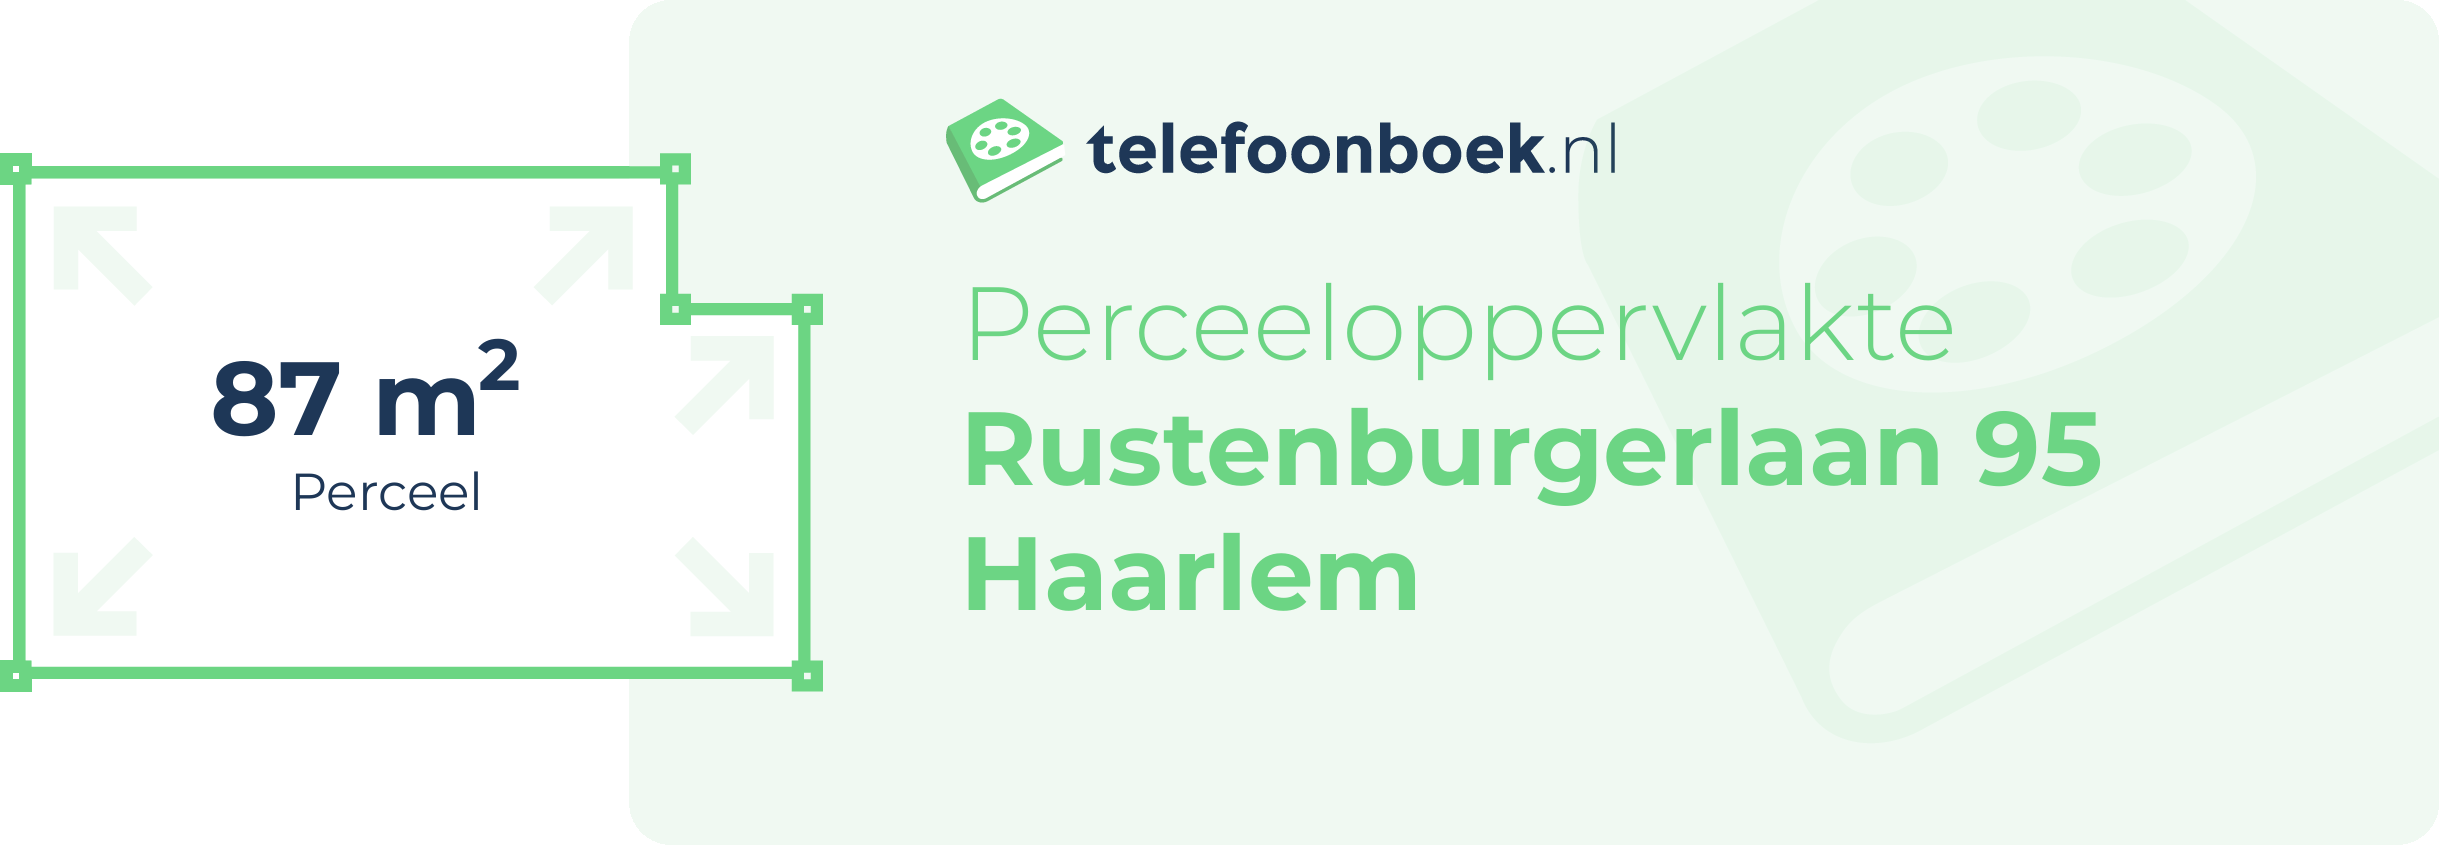 Perceeloppervlakte Rustenburgerlaan 95 Haarlem